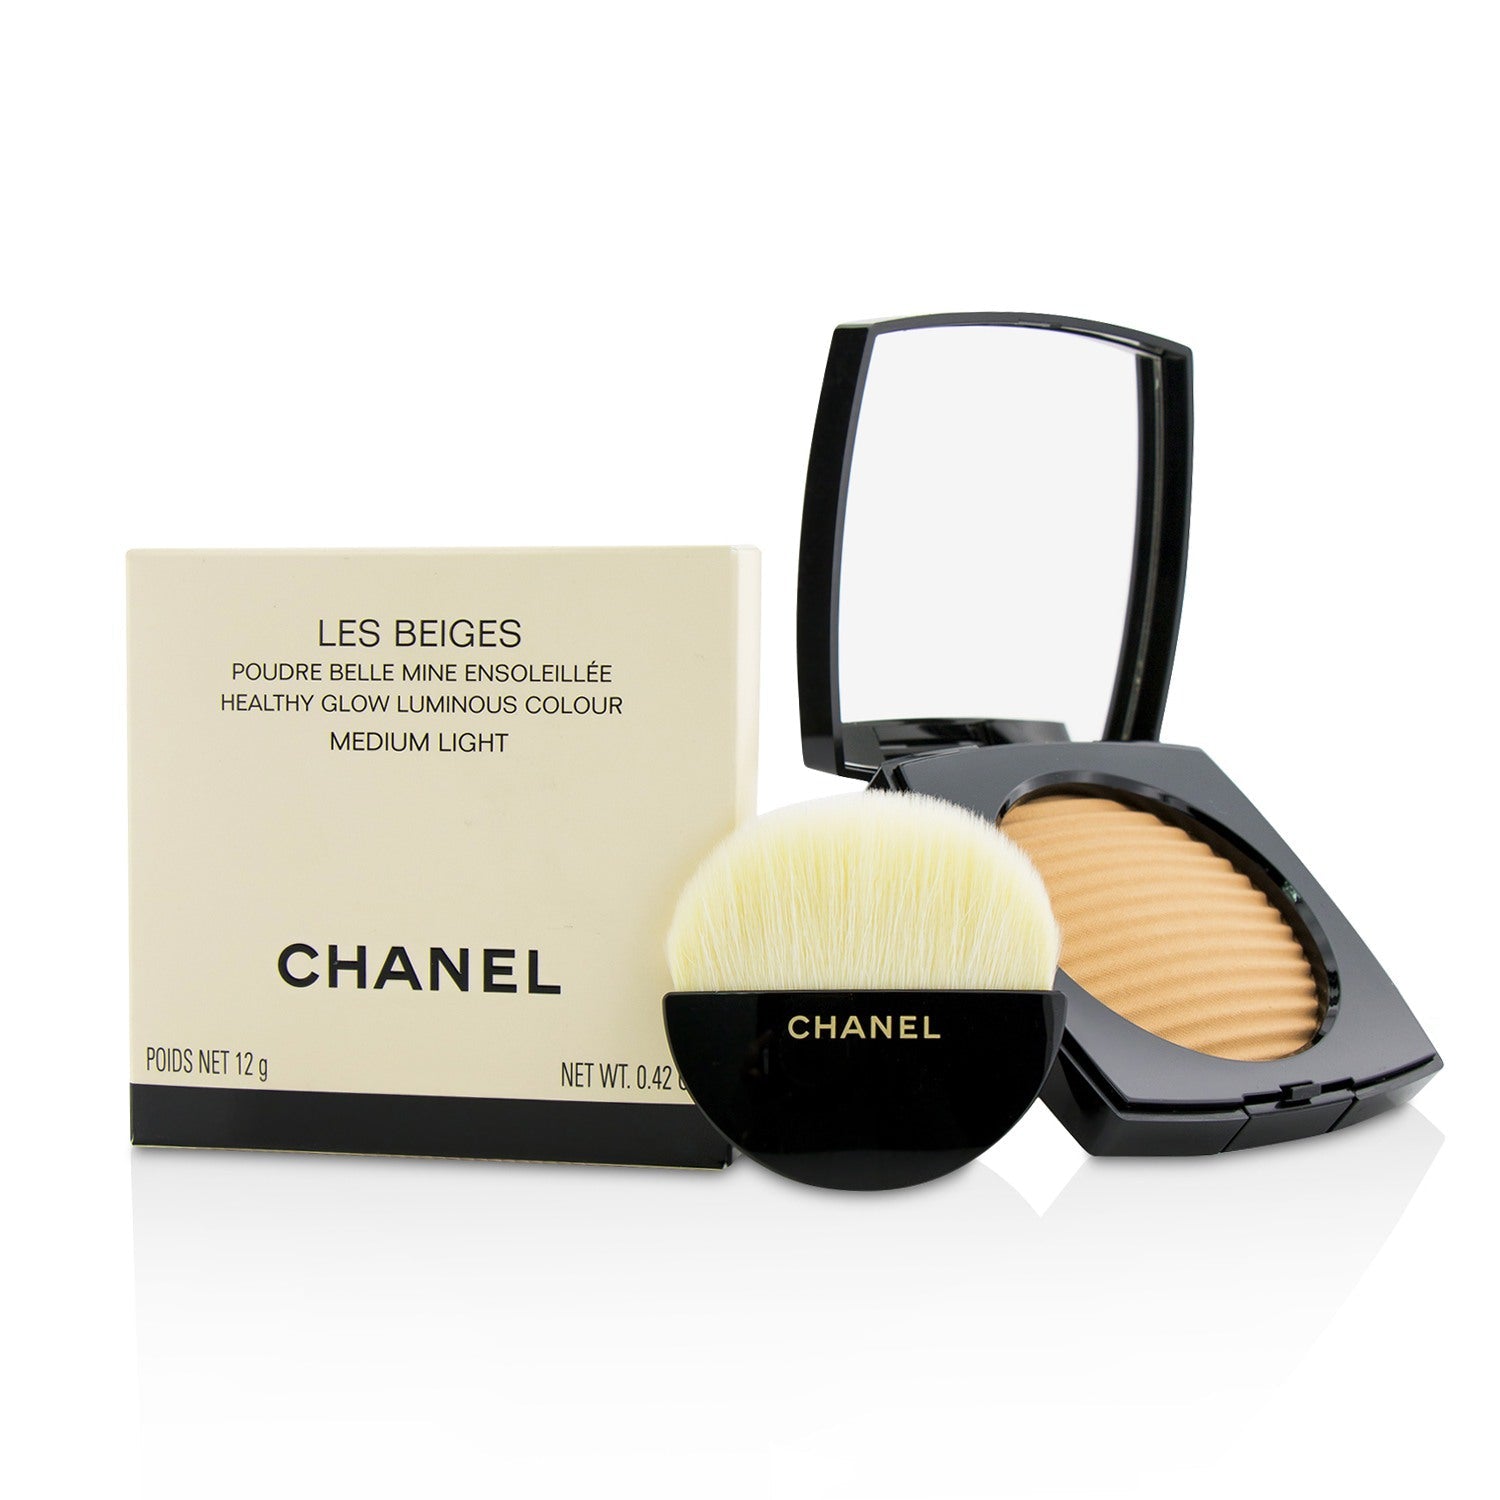 Chanel Vitalumiere Fluide Makeup # 60 Hale – Fresh Beauty Co. USA